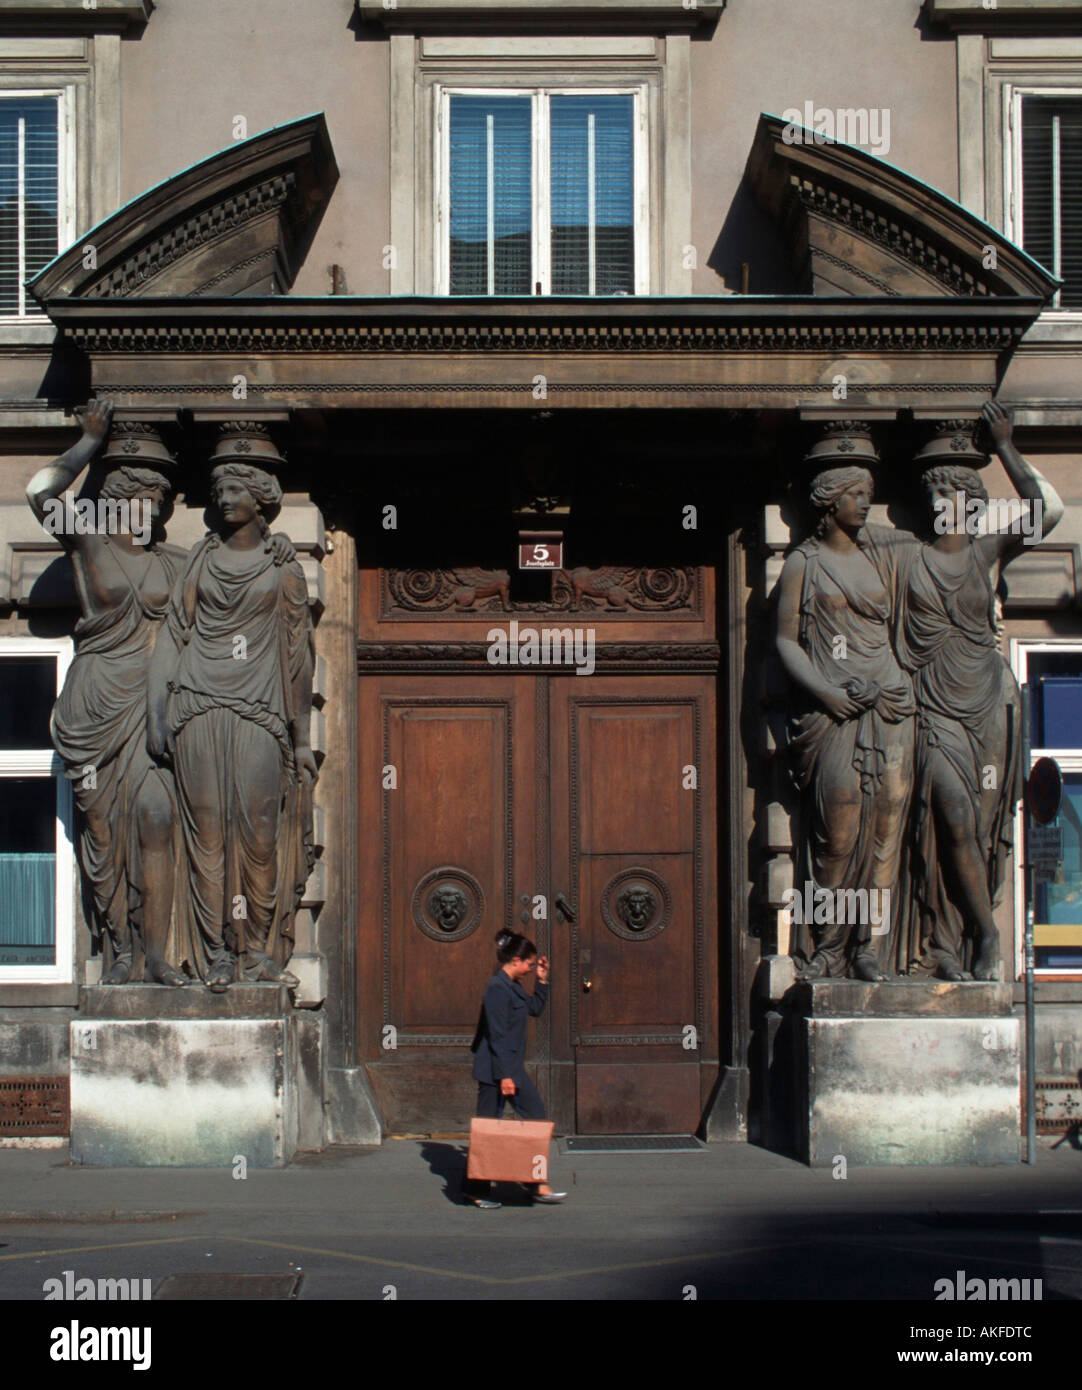 Wien 1, Josefsplatz, Karyatiden am Portal des Palais Pallavicini Stock Photo